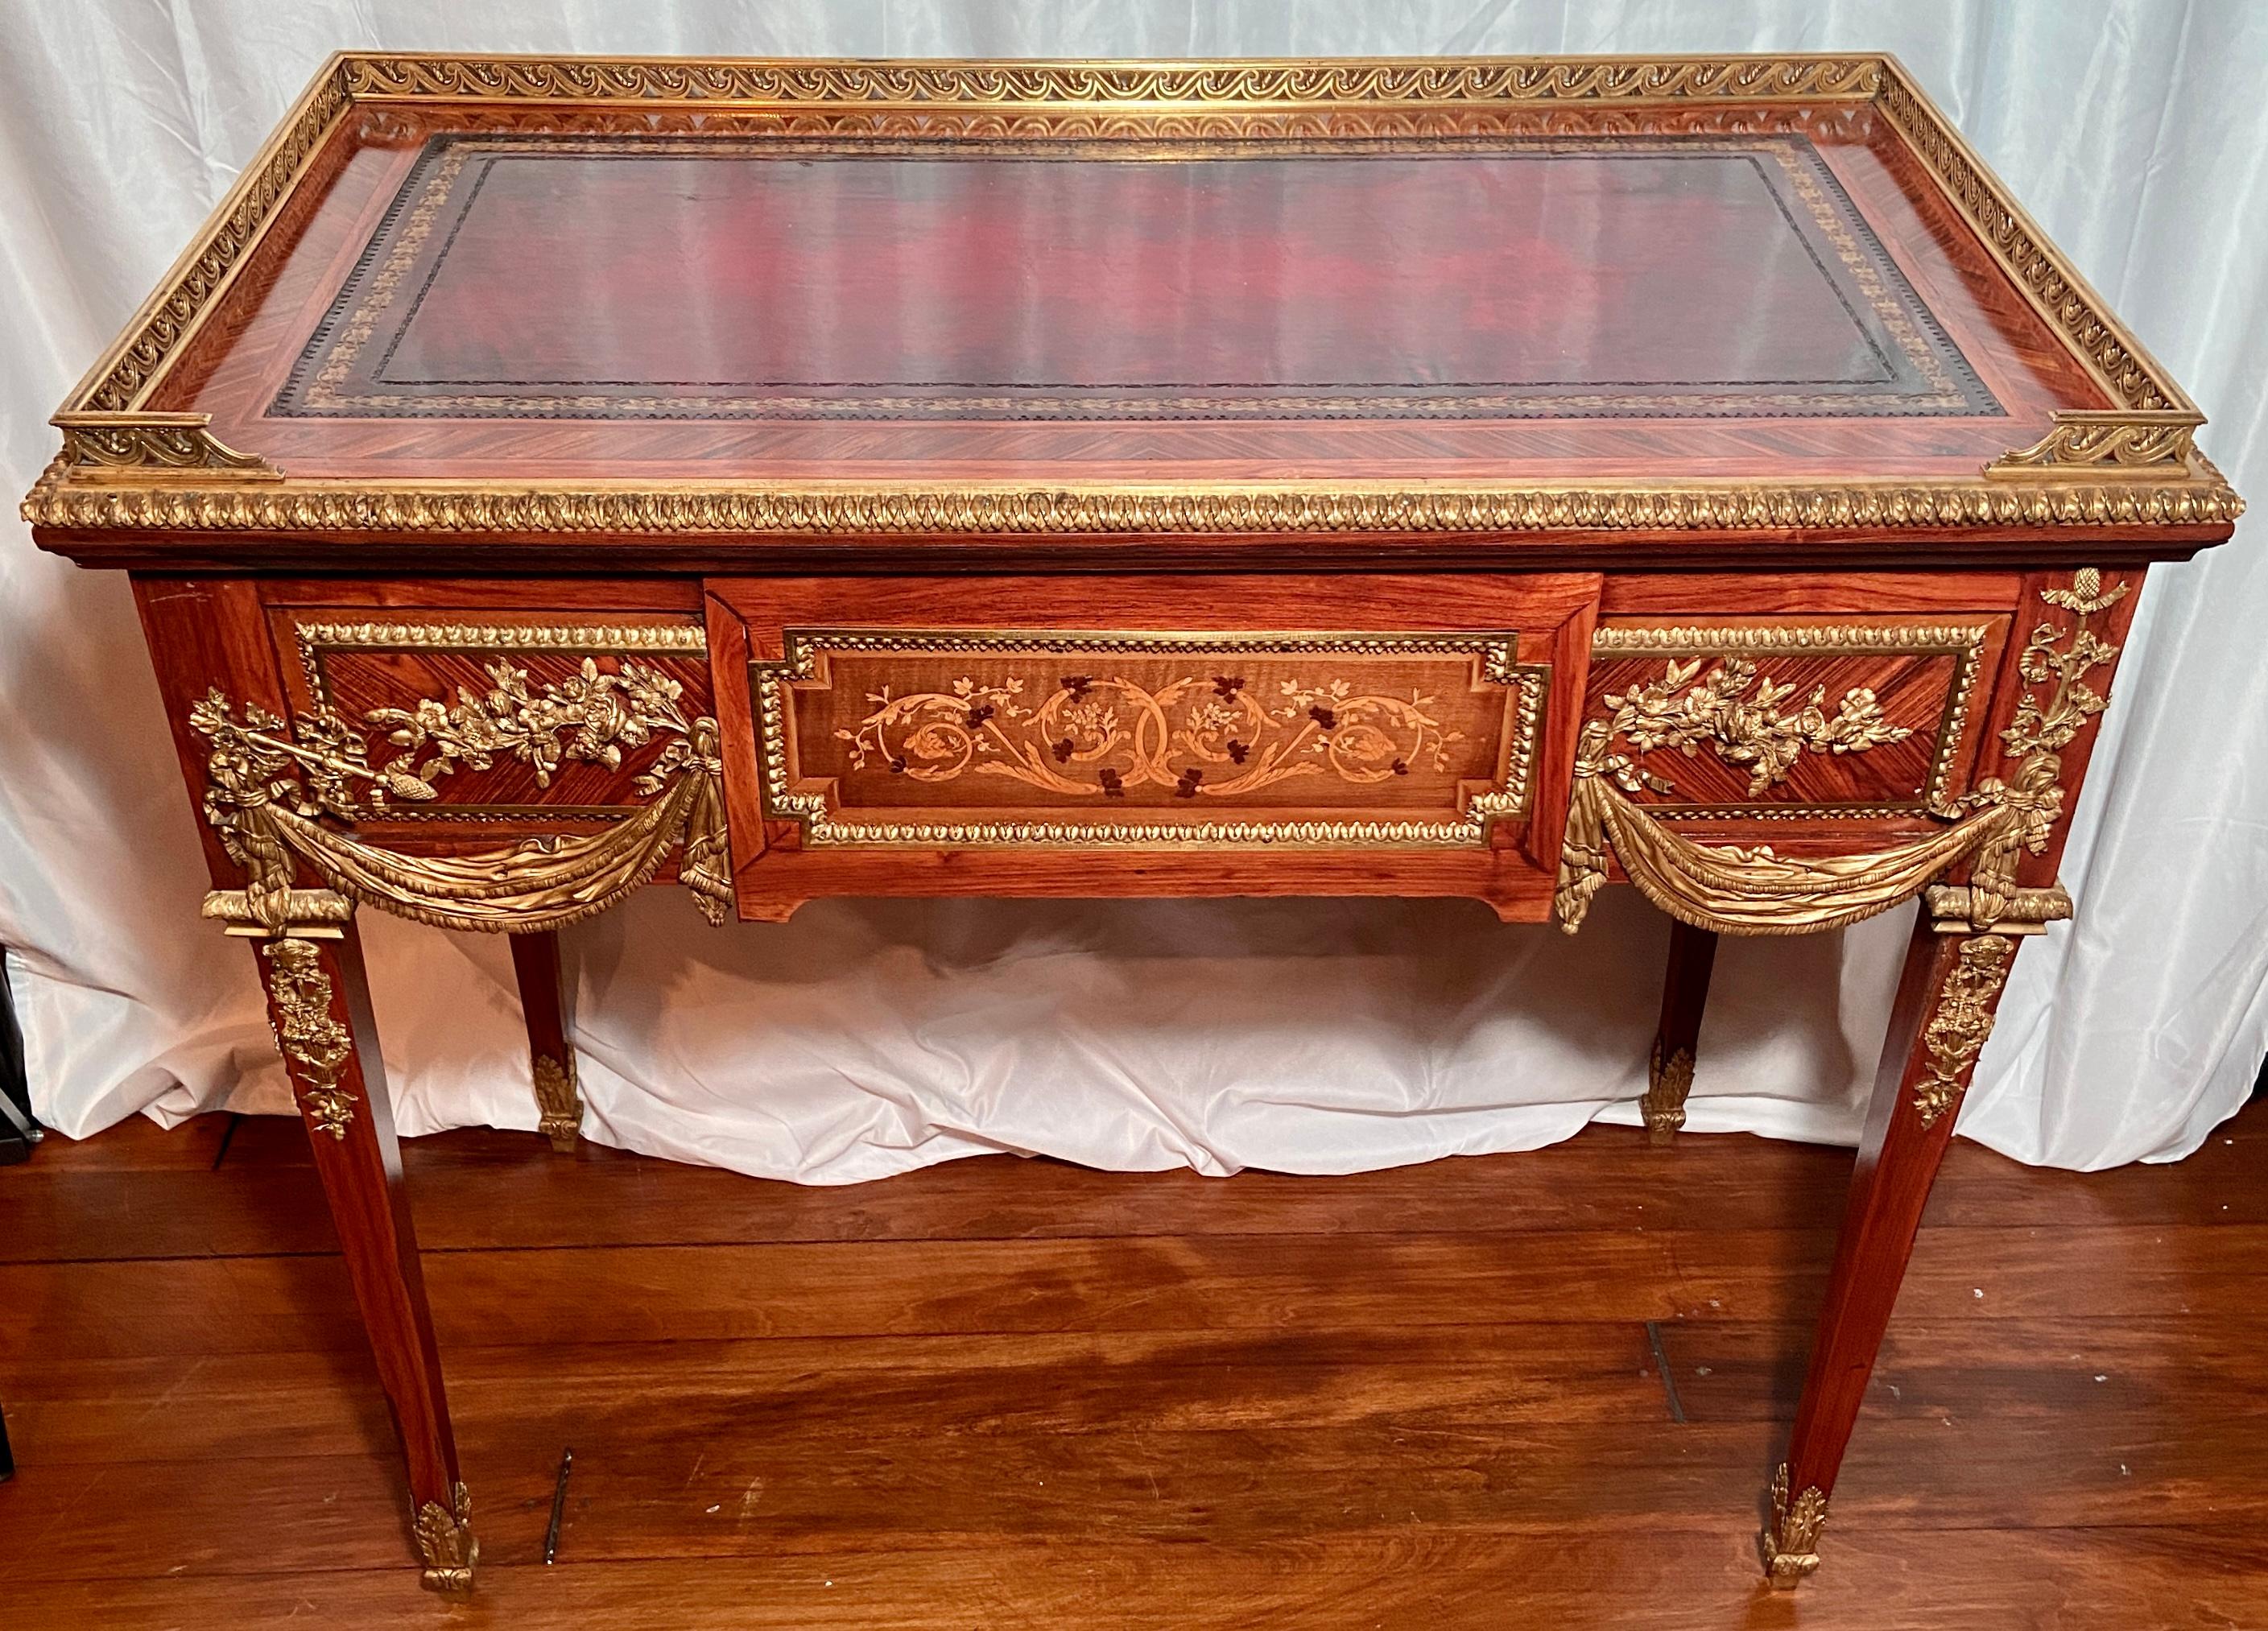 Antique French Napoleon III Ormolu mounted table desk and jardiniere, Circa 1865-1875.